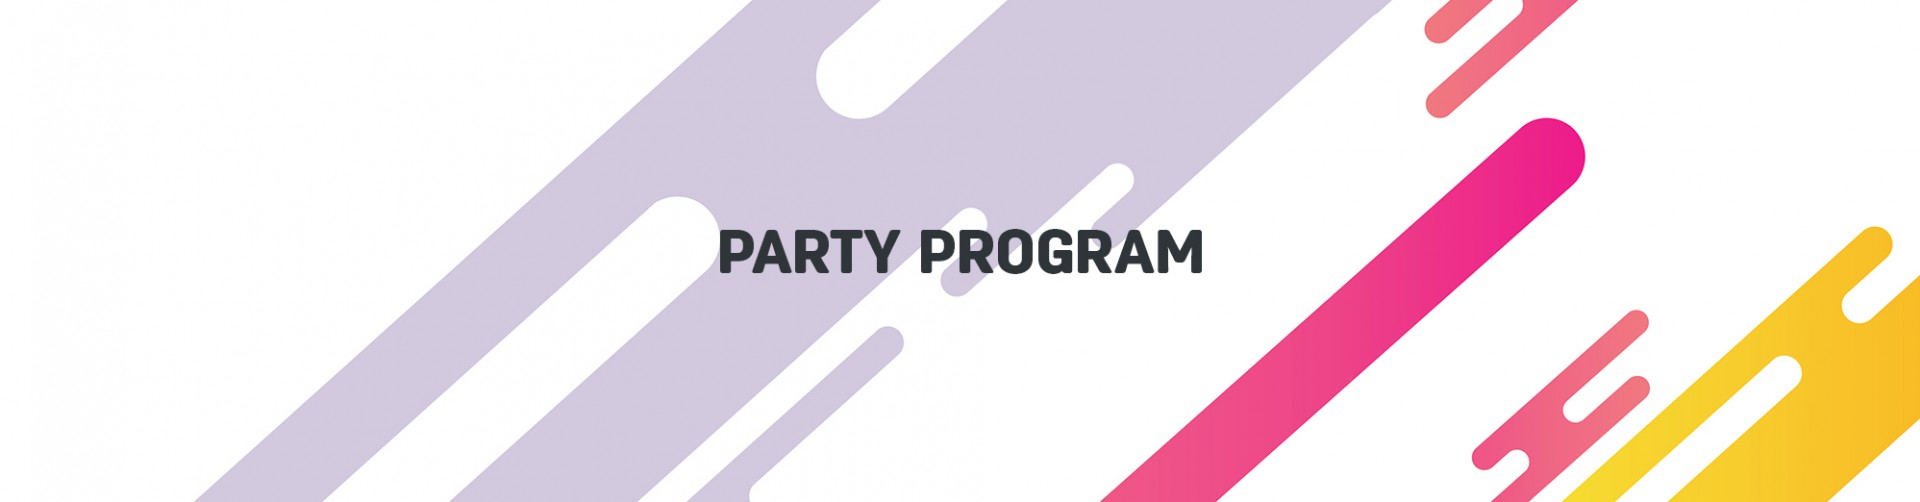 Party program